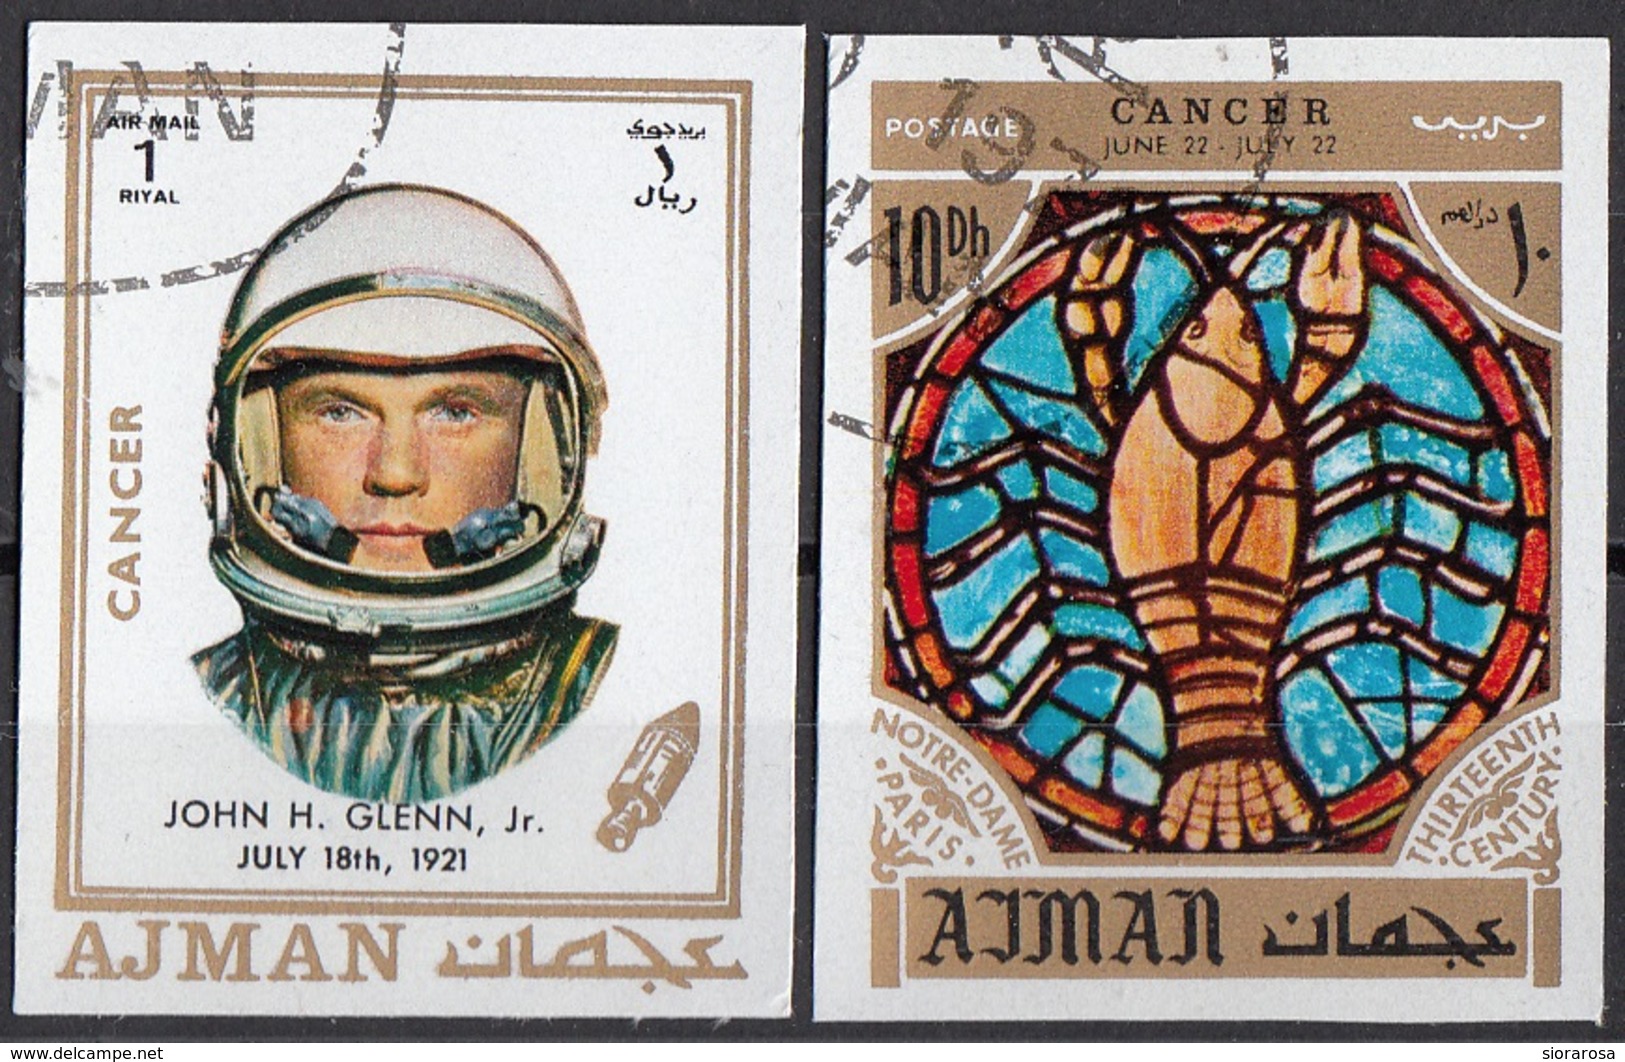 772 Ajman 1971 Astronauta John H. Glenn - Zodiaco Cancro Cancer - Stainled Glass Window Vetrata Notre Dame - Astrologia